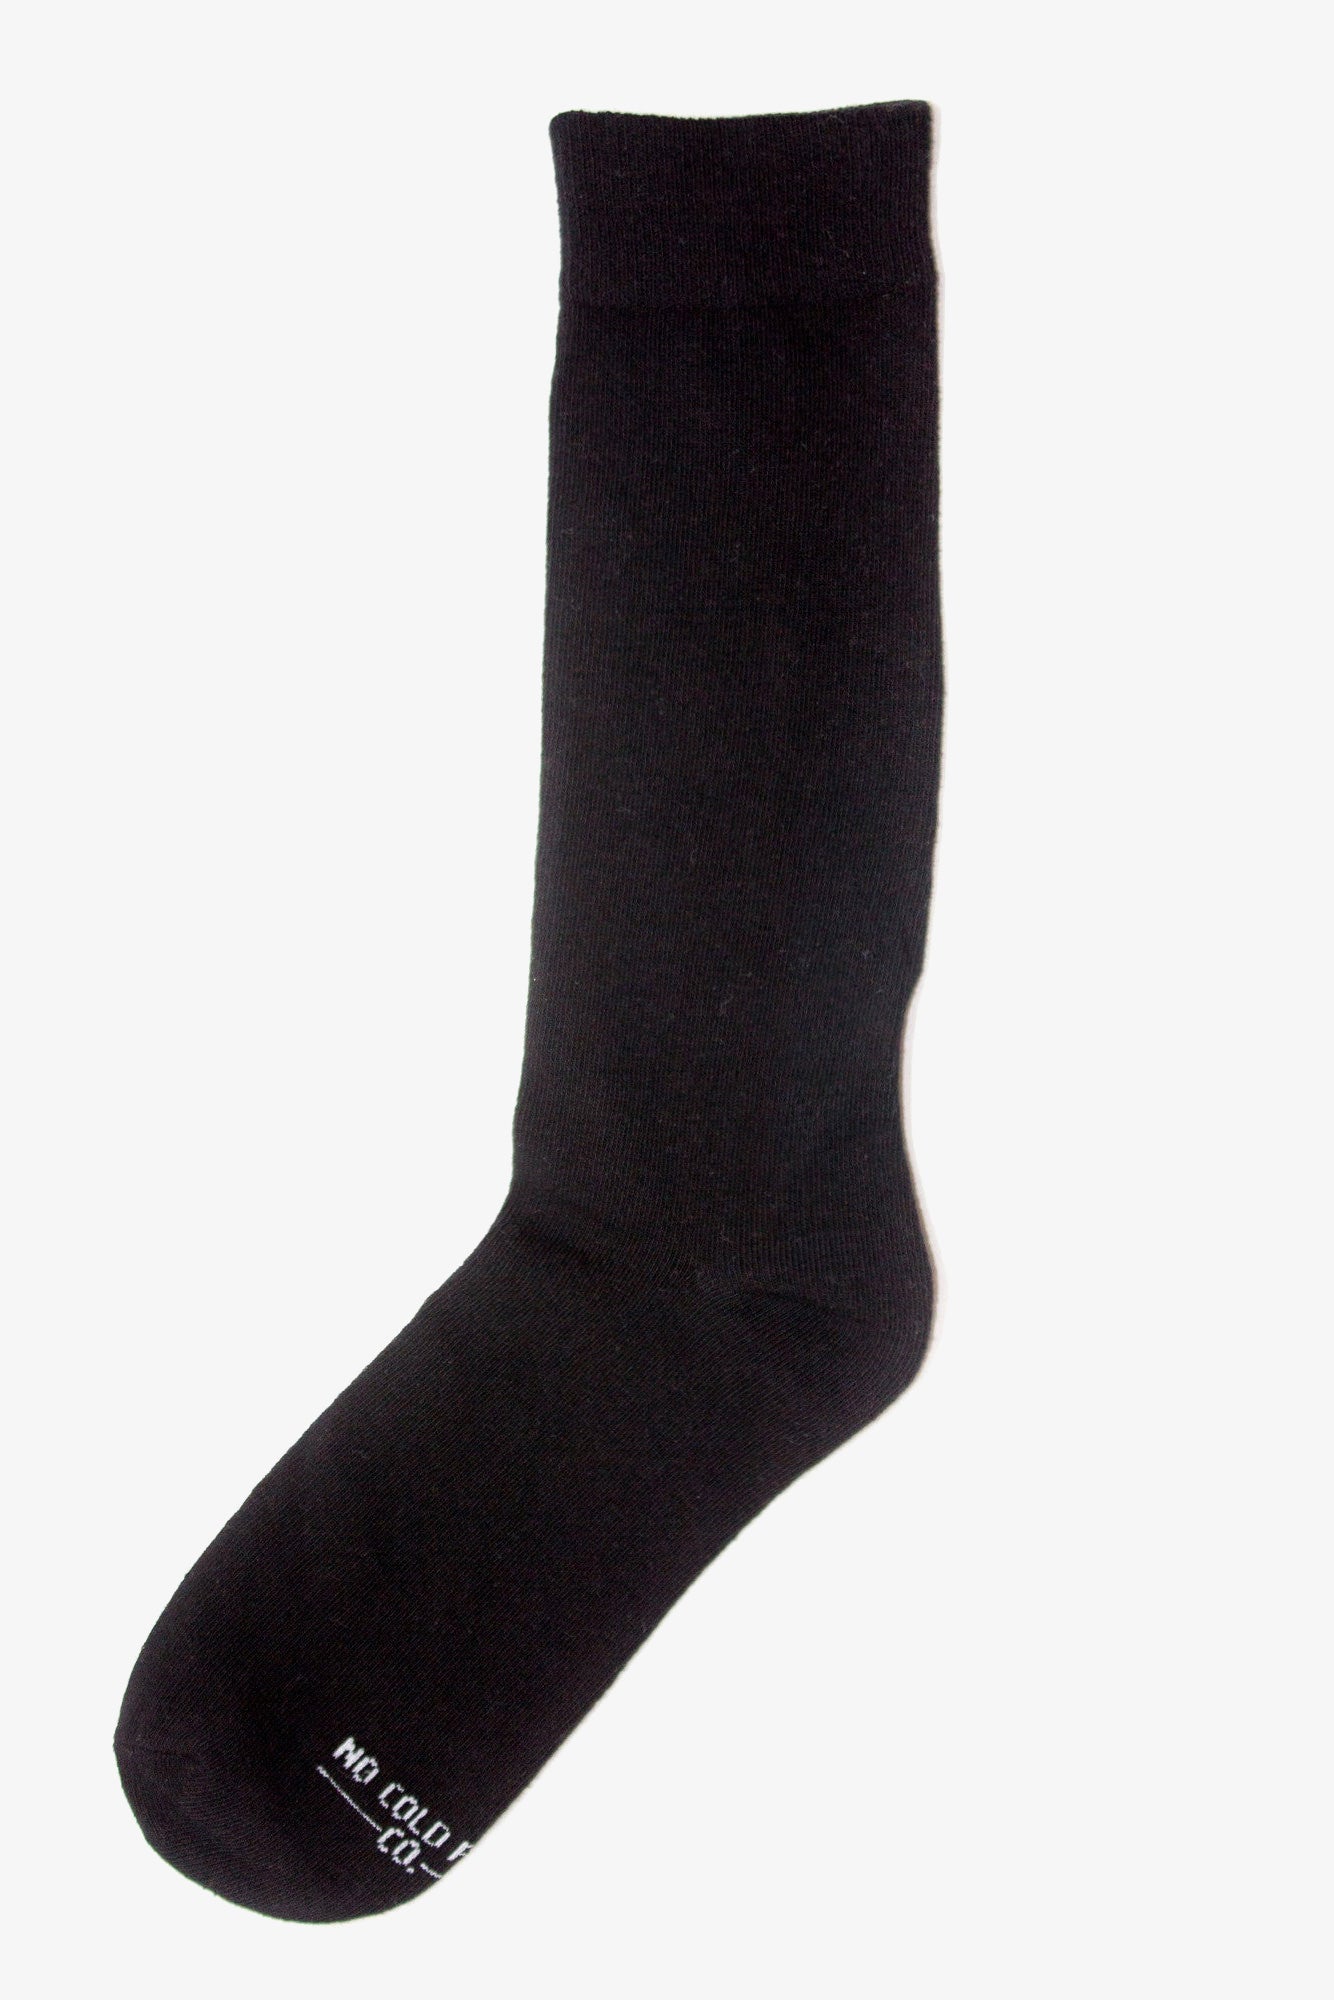 Solid Black Groomsmen Socks by No Cold Feet